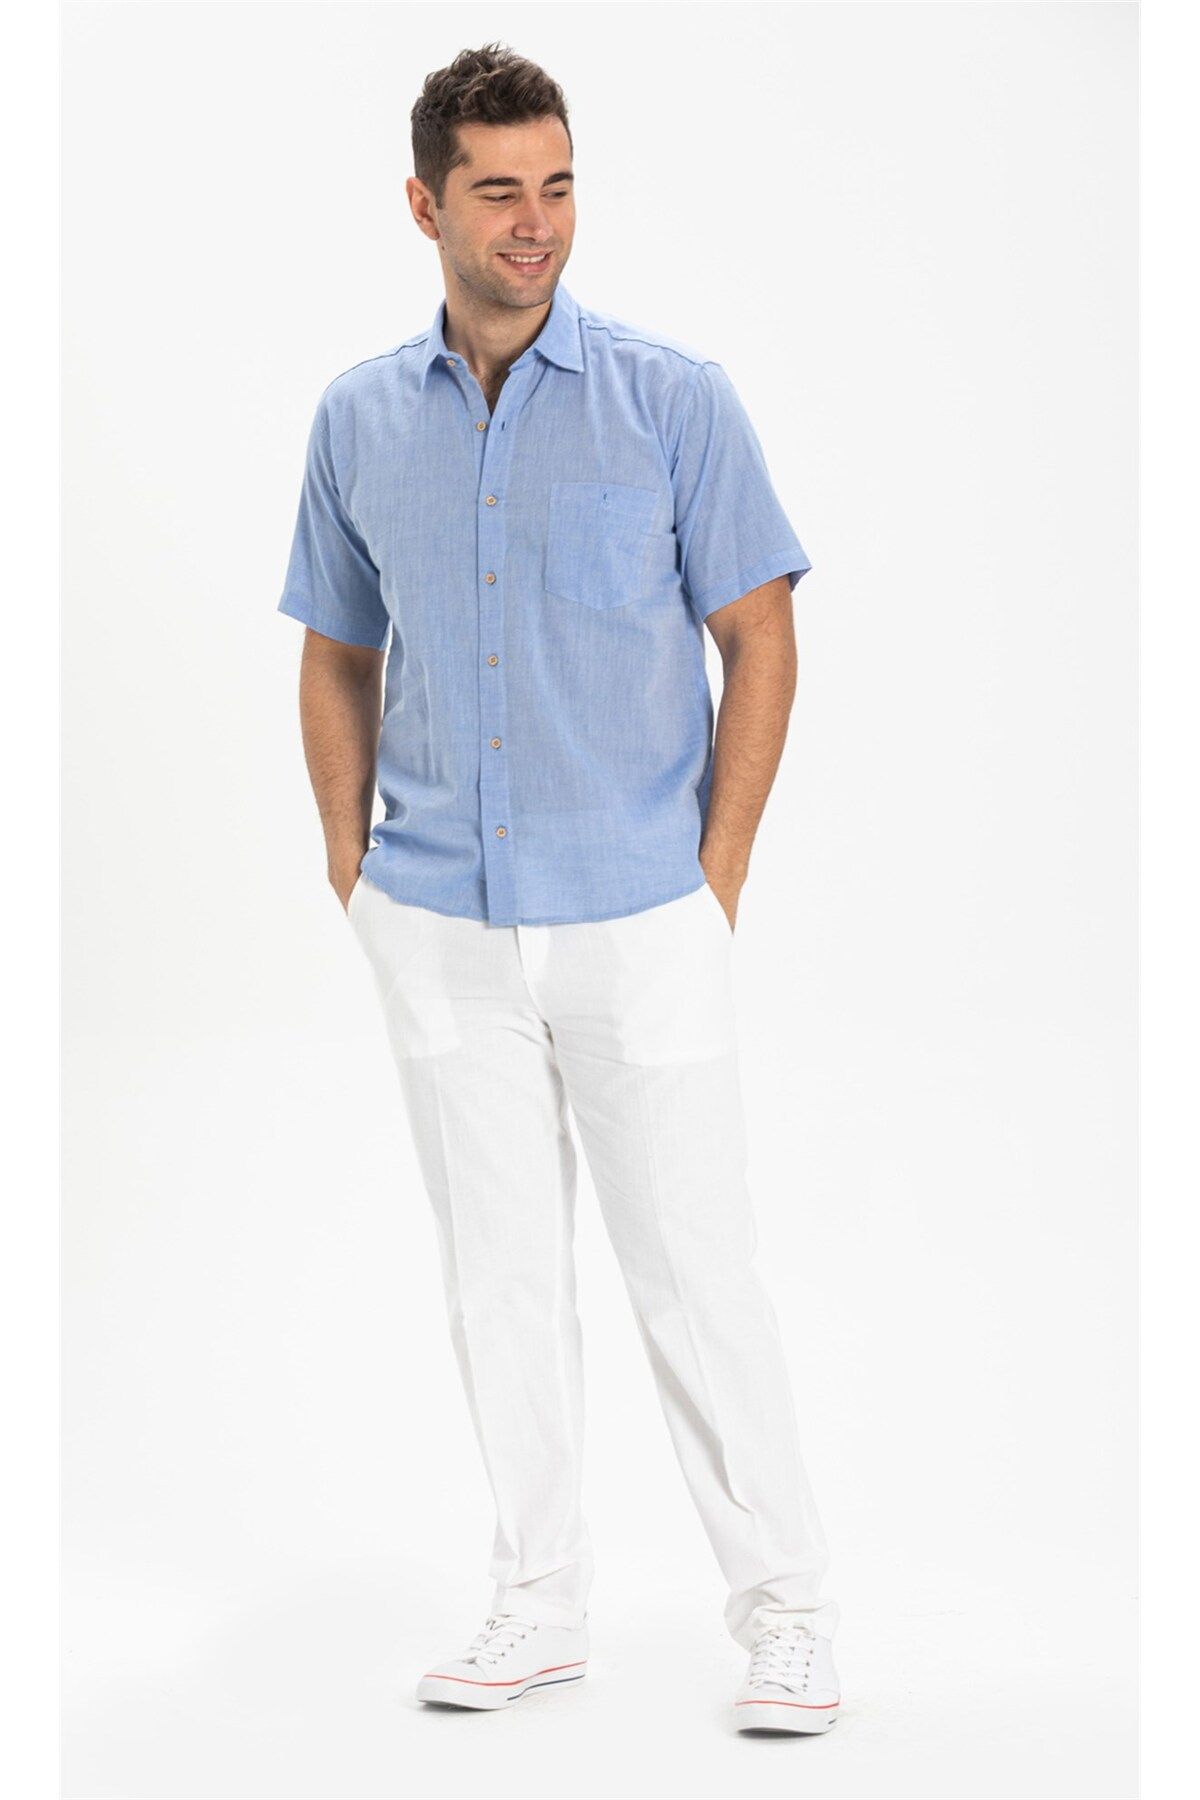 Eliş Şile Bezi پیراهن آستین کوتاه شیله پارچه ای تک جیبی مردانه آبی 3032 سایز بزرگ